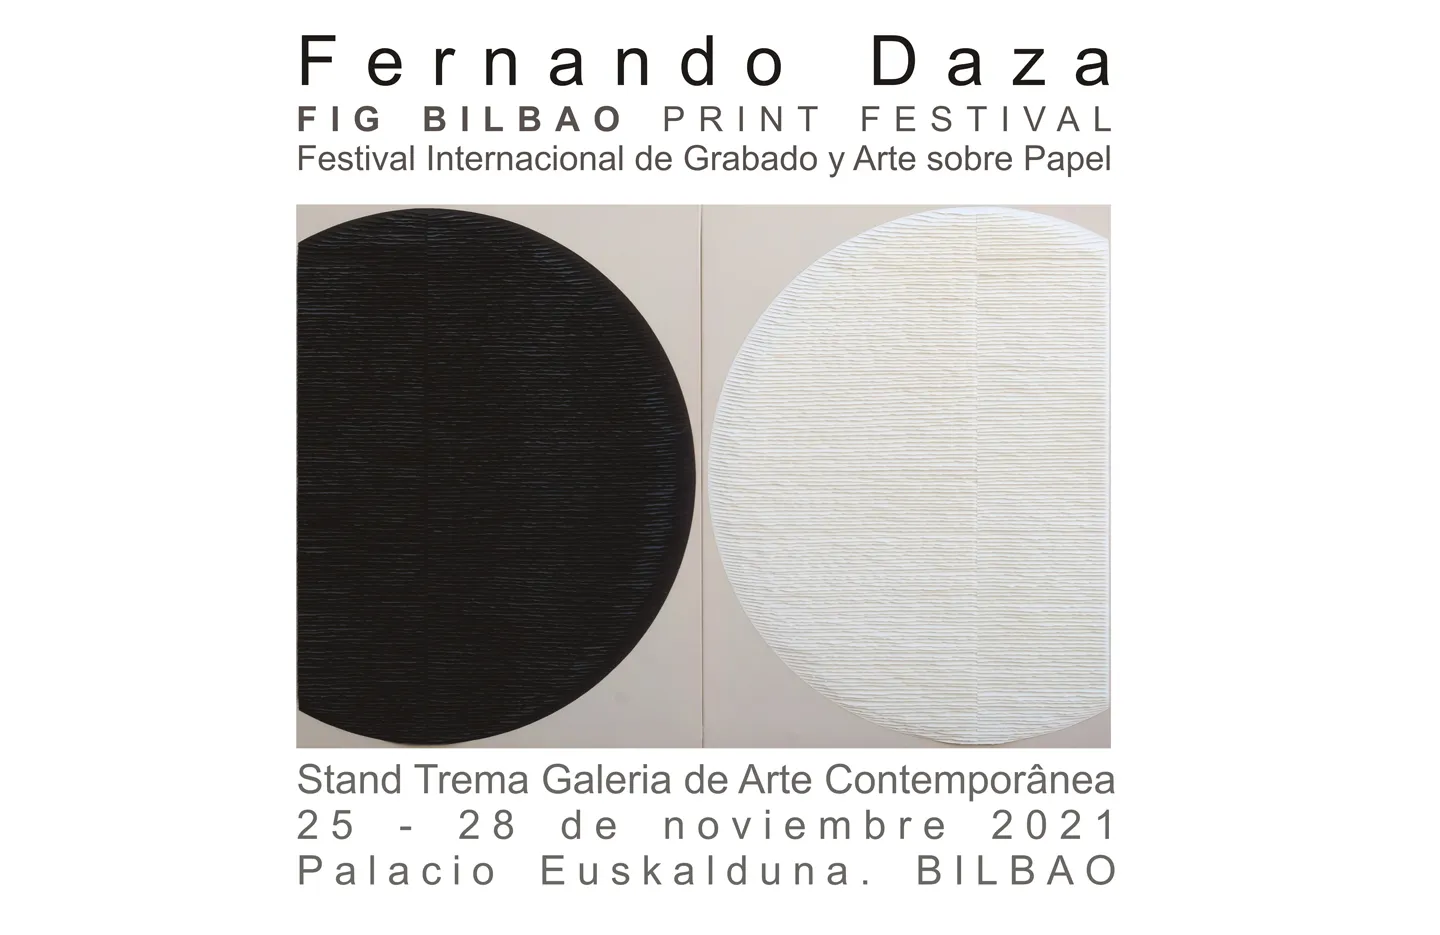 Fernando Daza Visual Artist - evento 2021 fig bilbao